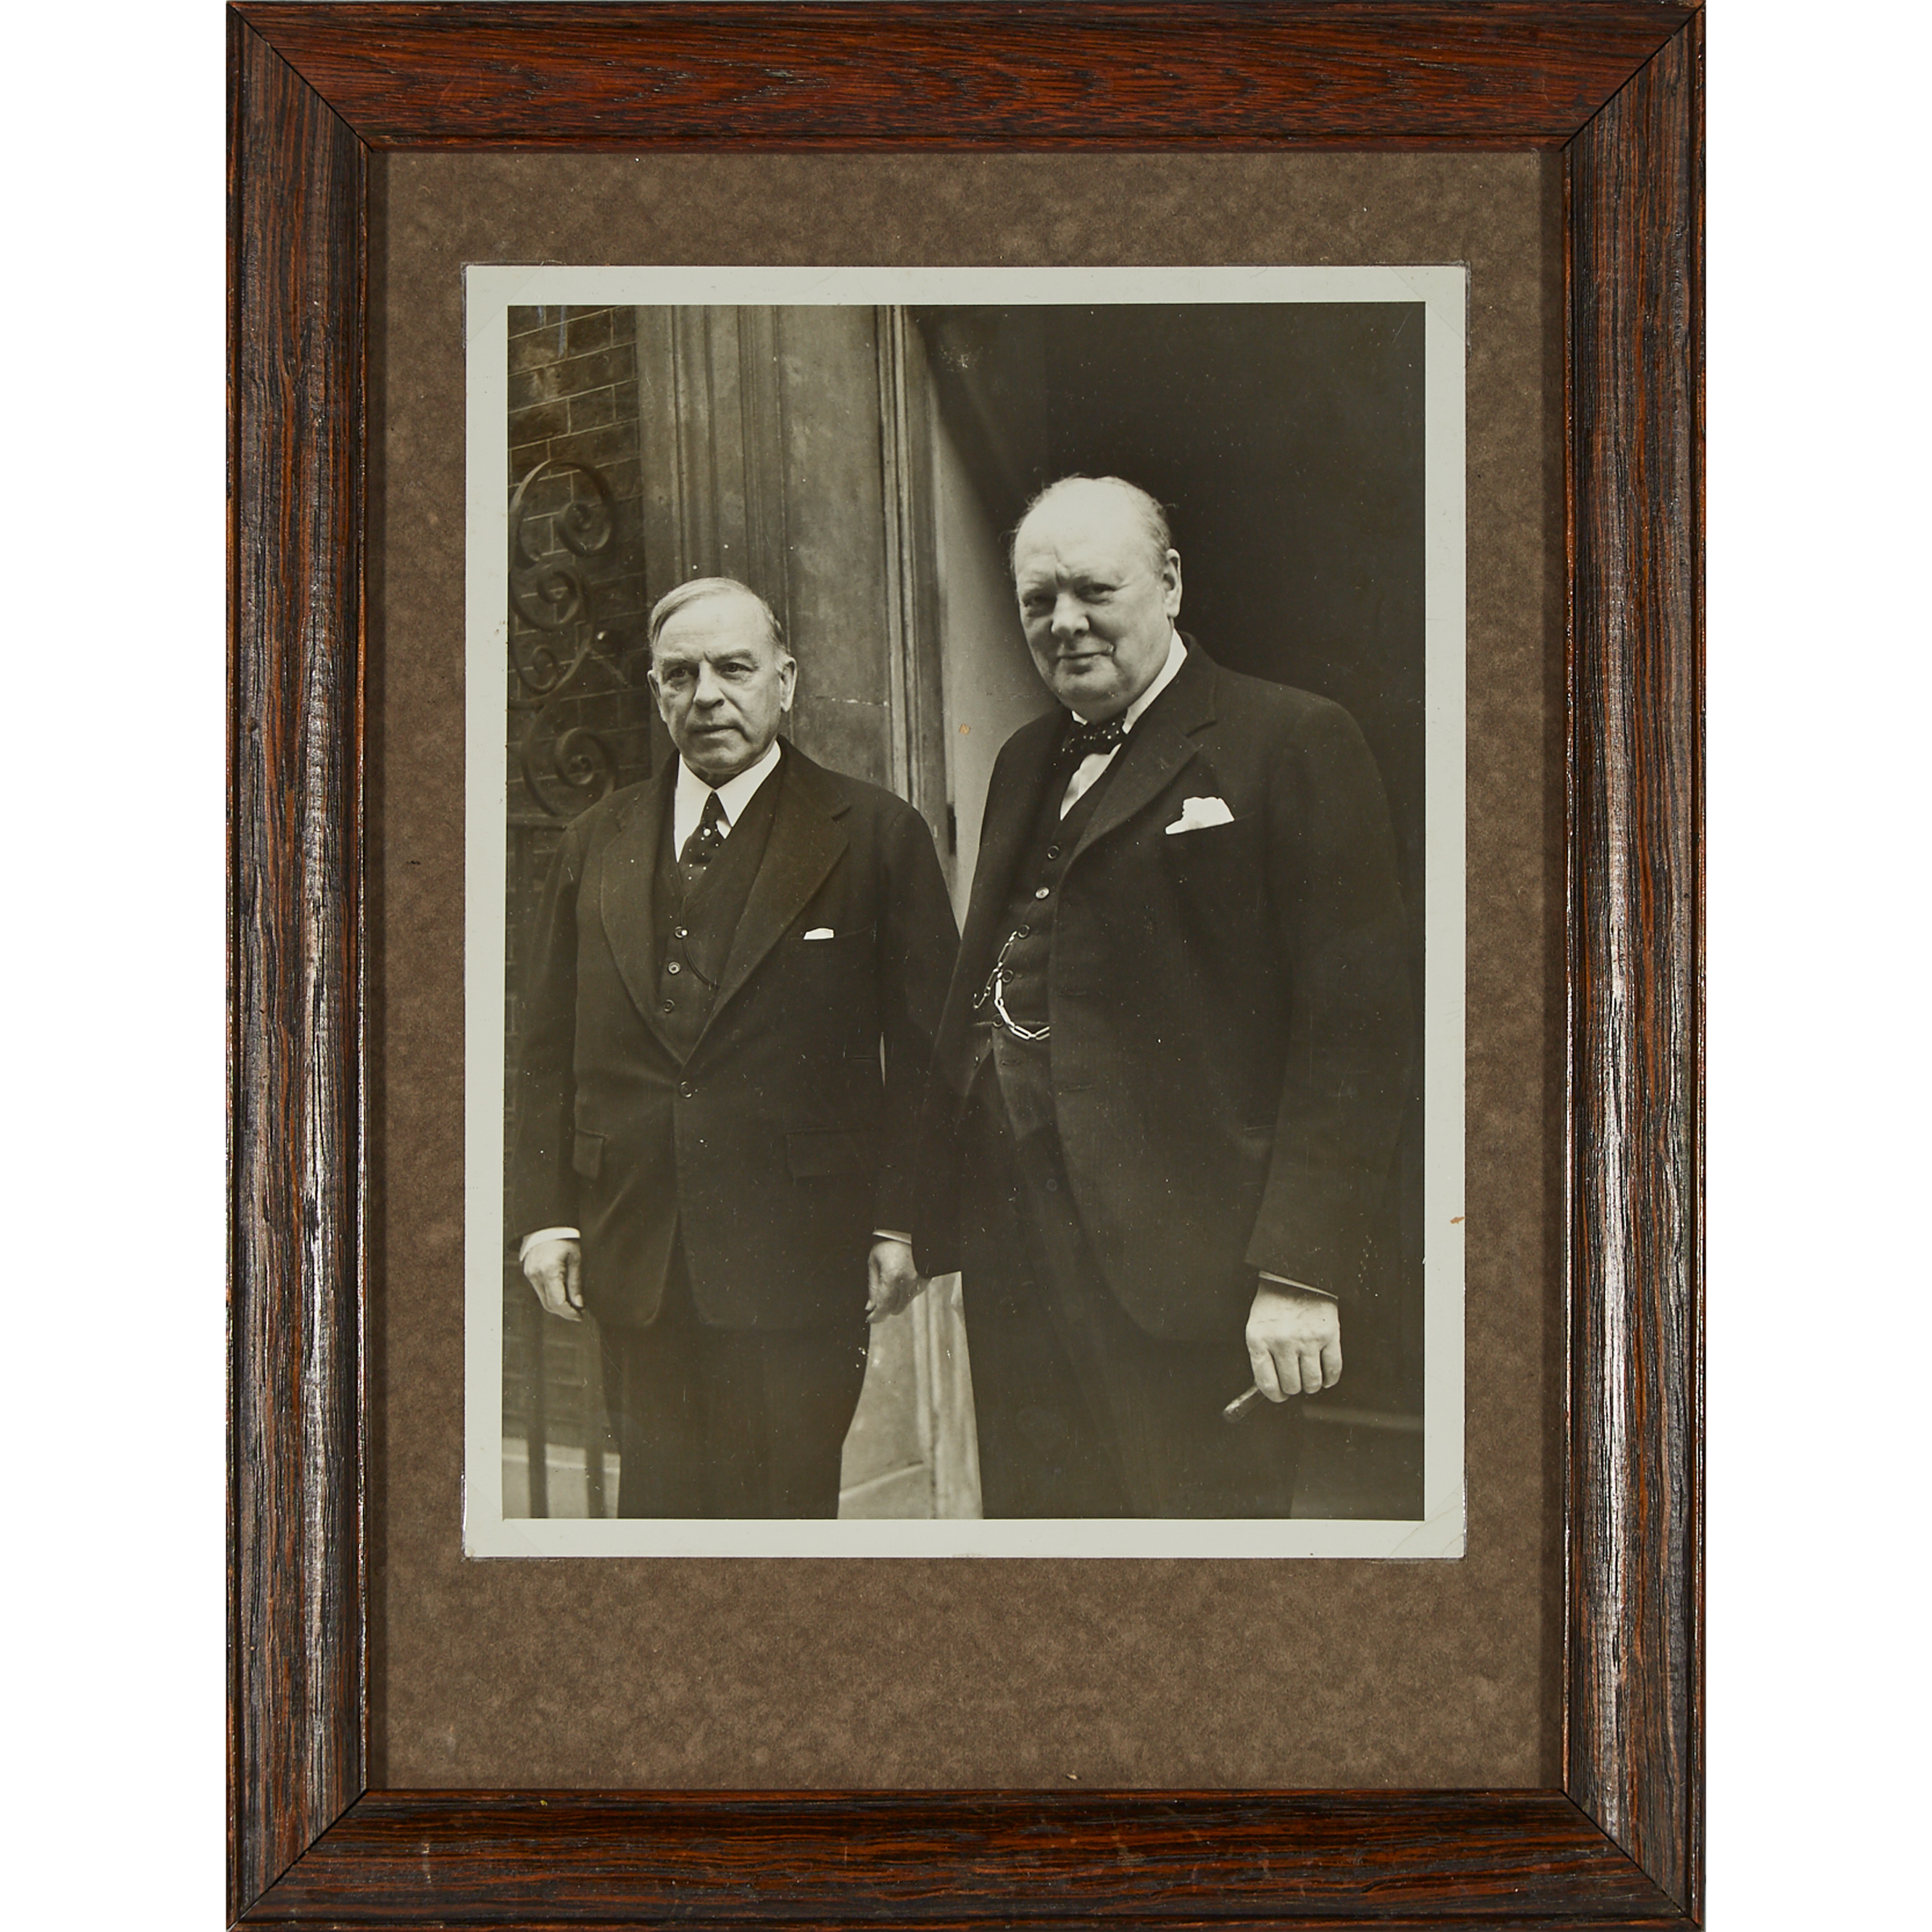 Two Press Photographs of William Lyon Mackenzie King, mid 20th century